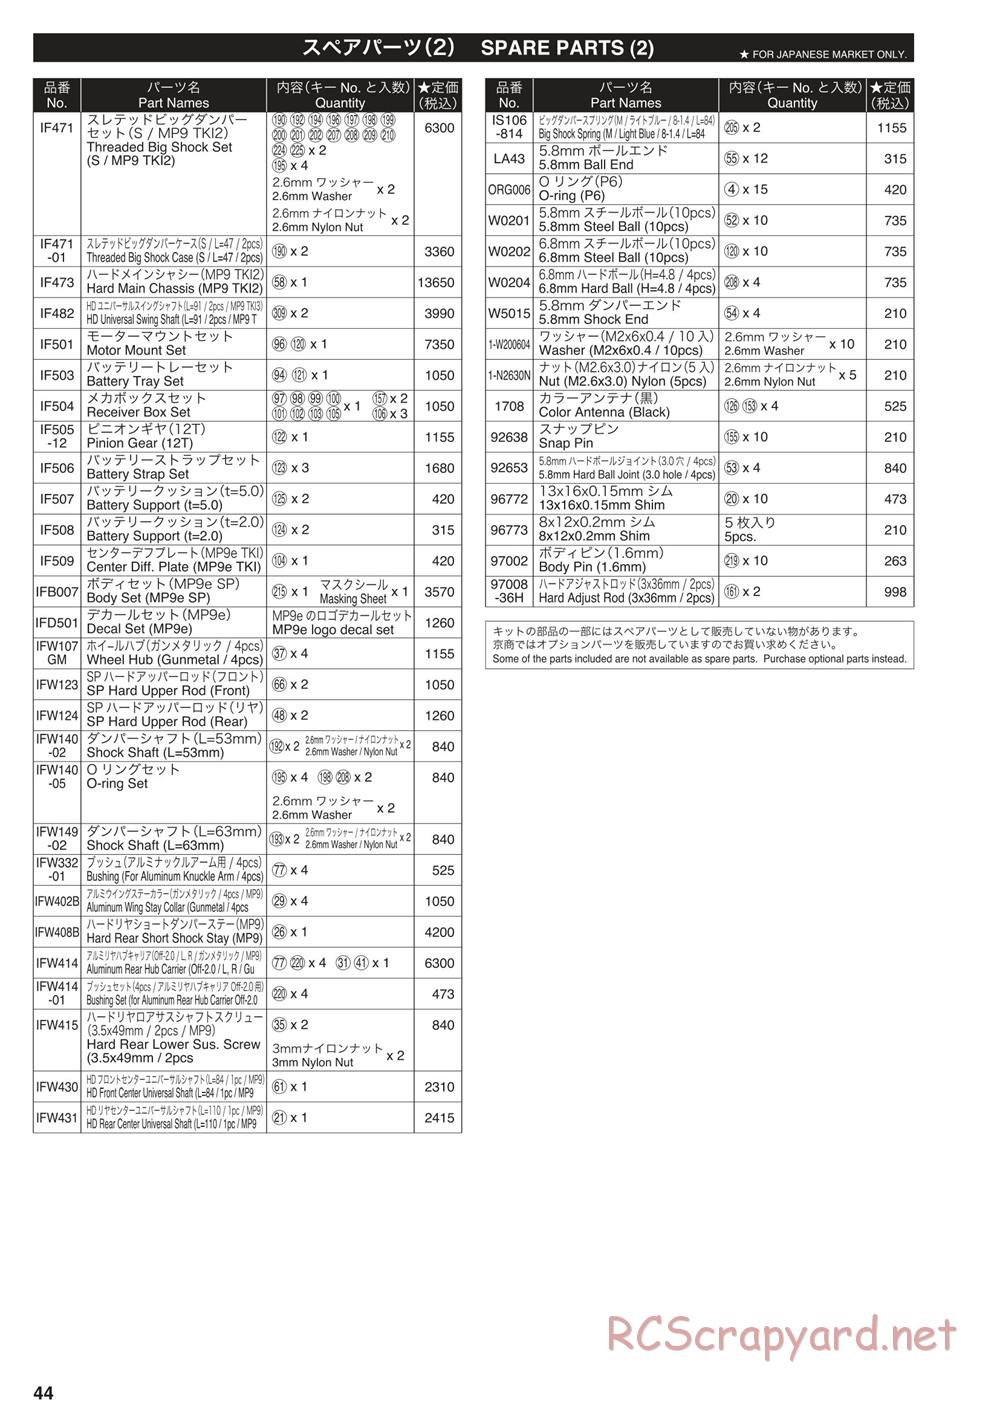 Kyosho - Inferno MP9e TKI - Parts List - Page 2